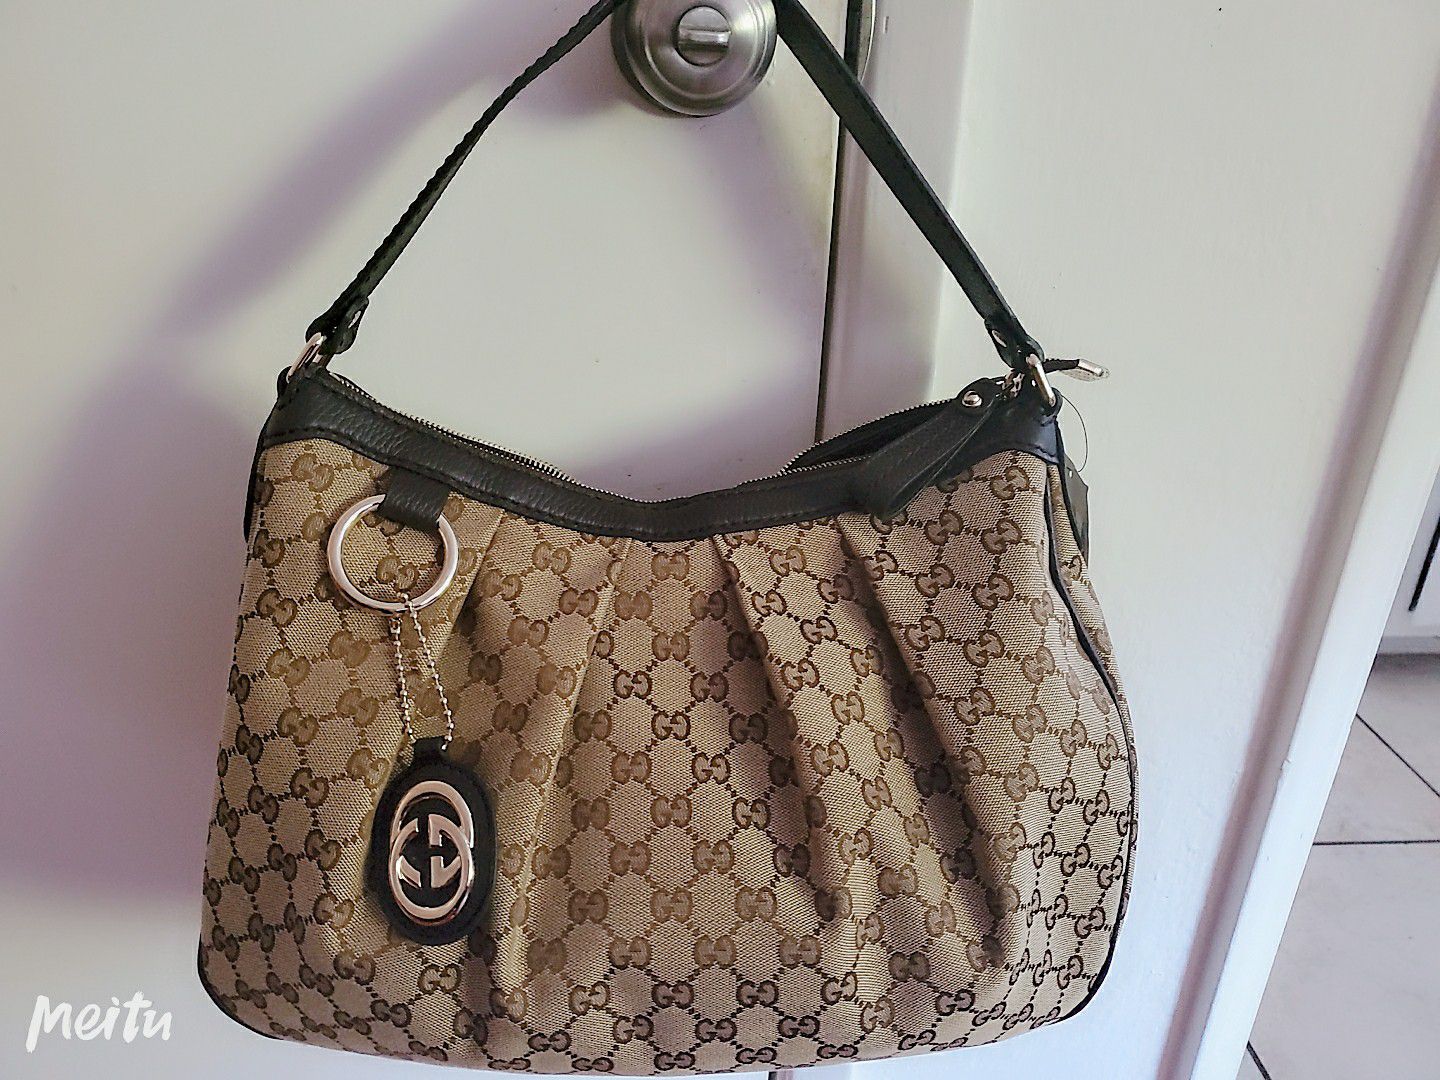 Brand new authentic Gucci handbag